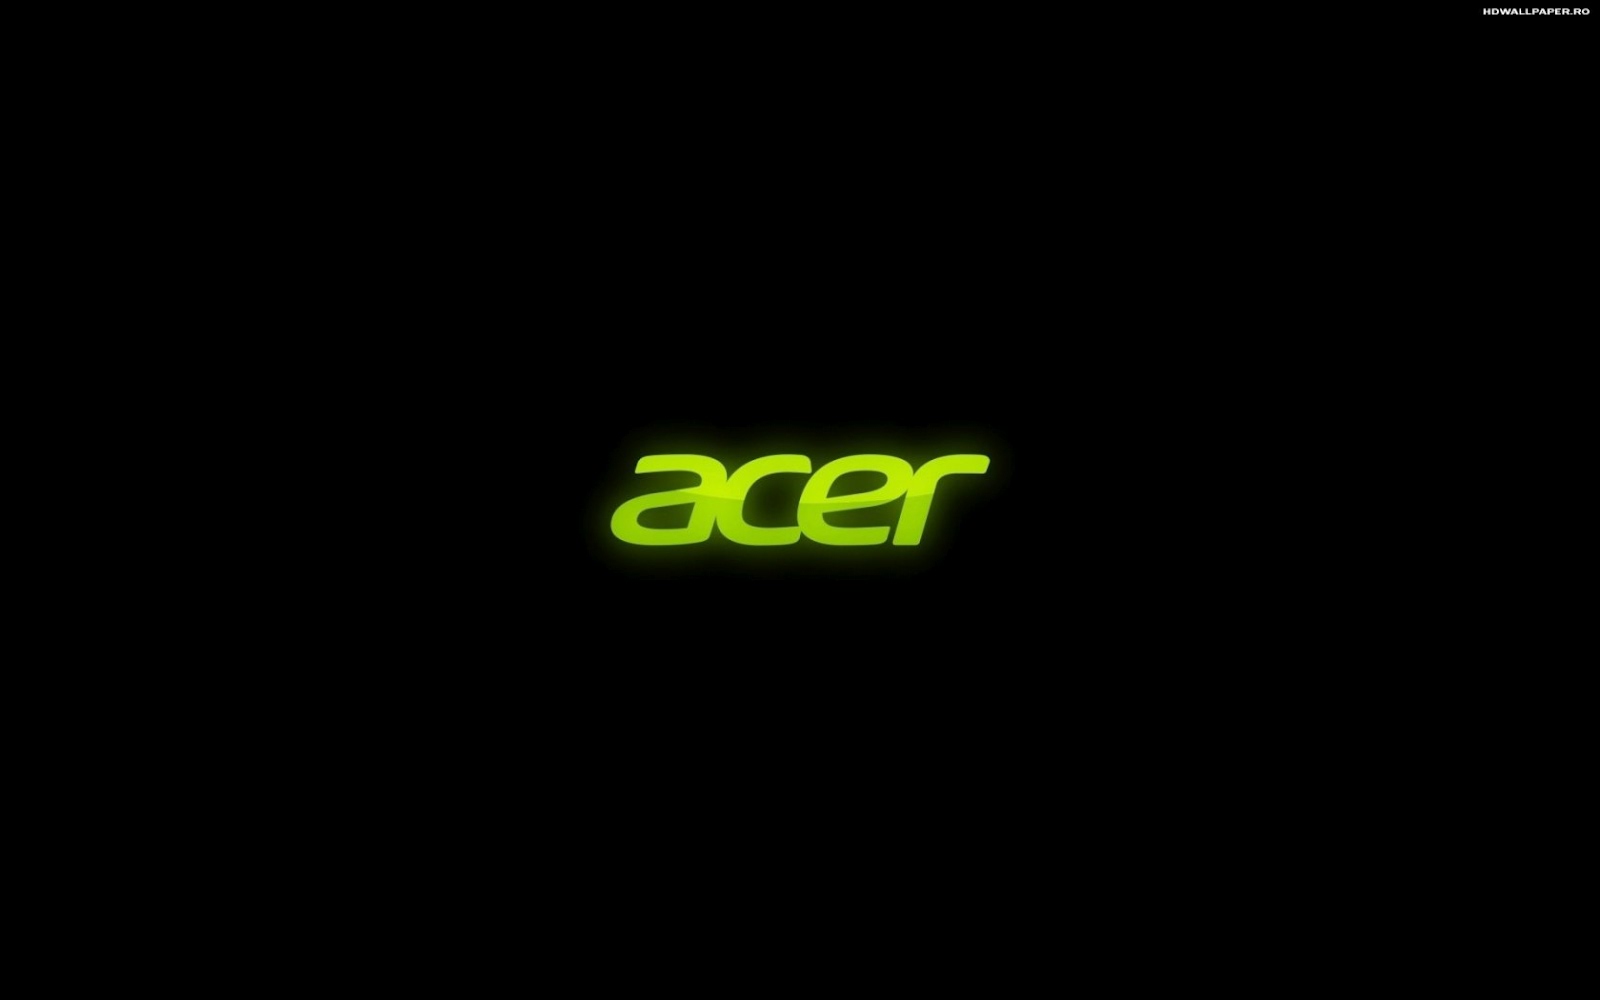 ... acer laptop picture acer logo acer icon acer desktop wallpapers acer